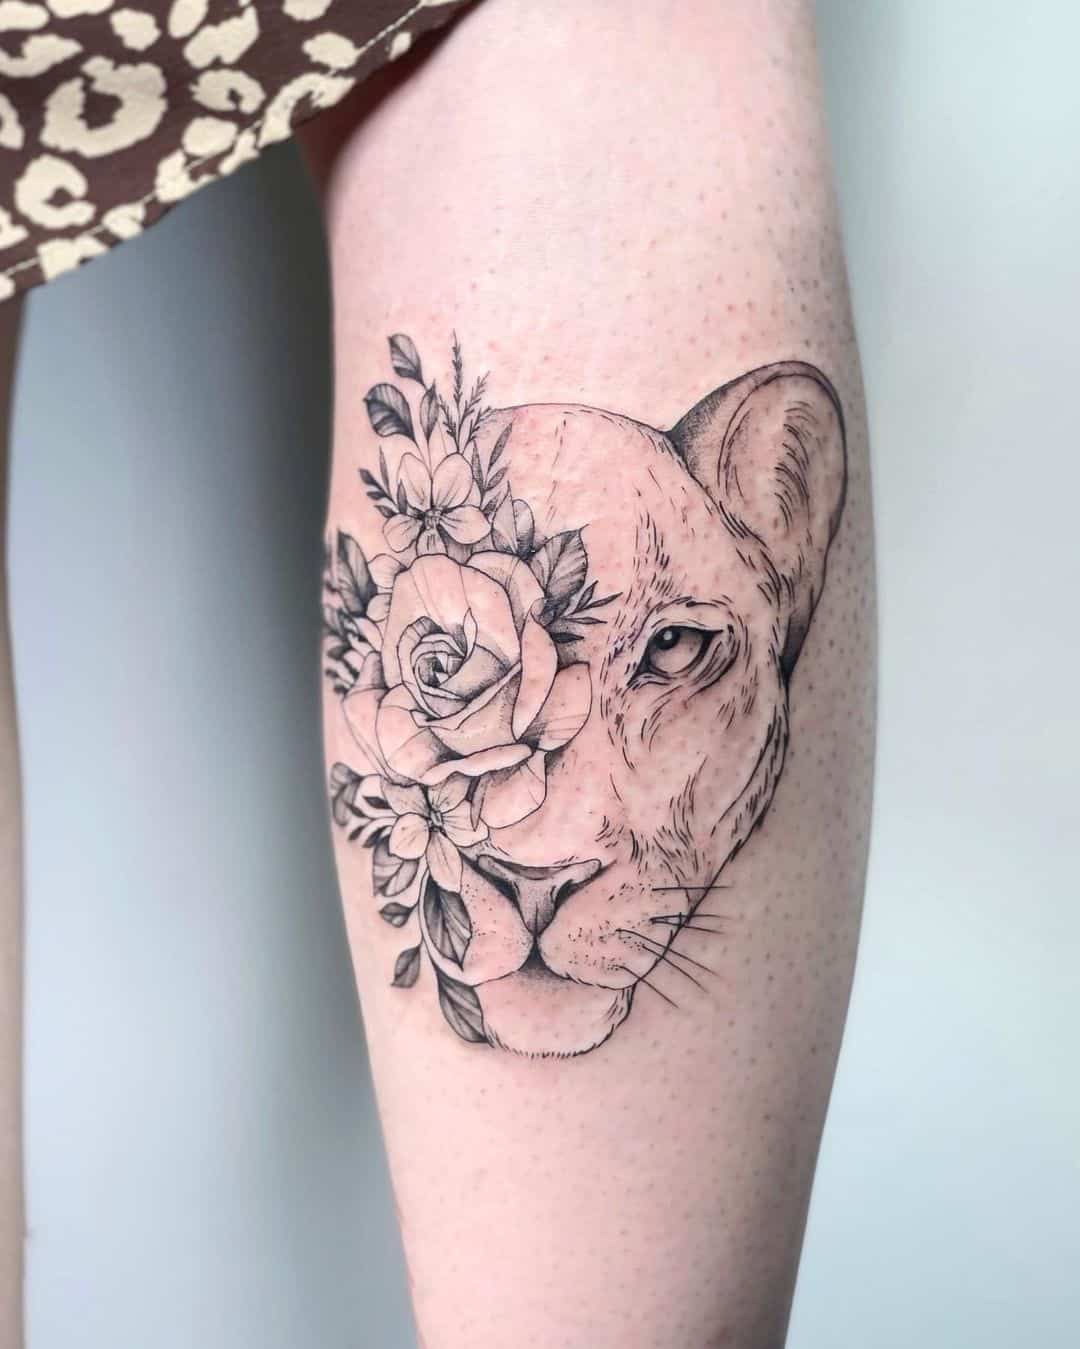 Tattoo uploaded by JenTheRipper • lion tattoo by Jade Chanel #JadeChanel  #illustrative #lion #animal #ornamental #flower #floral #nature  #tattoosondarkskin #darkskintattoos • Tattoodo